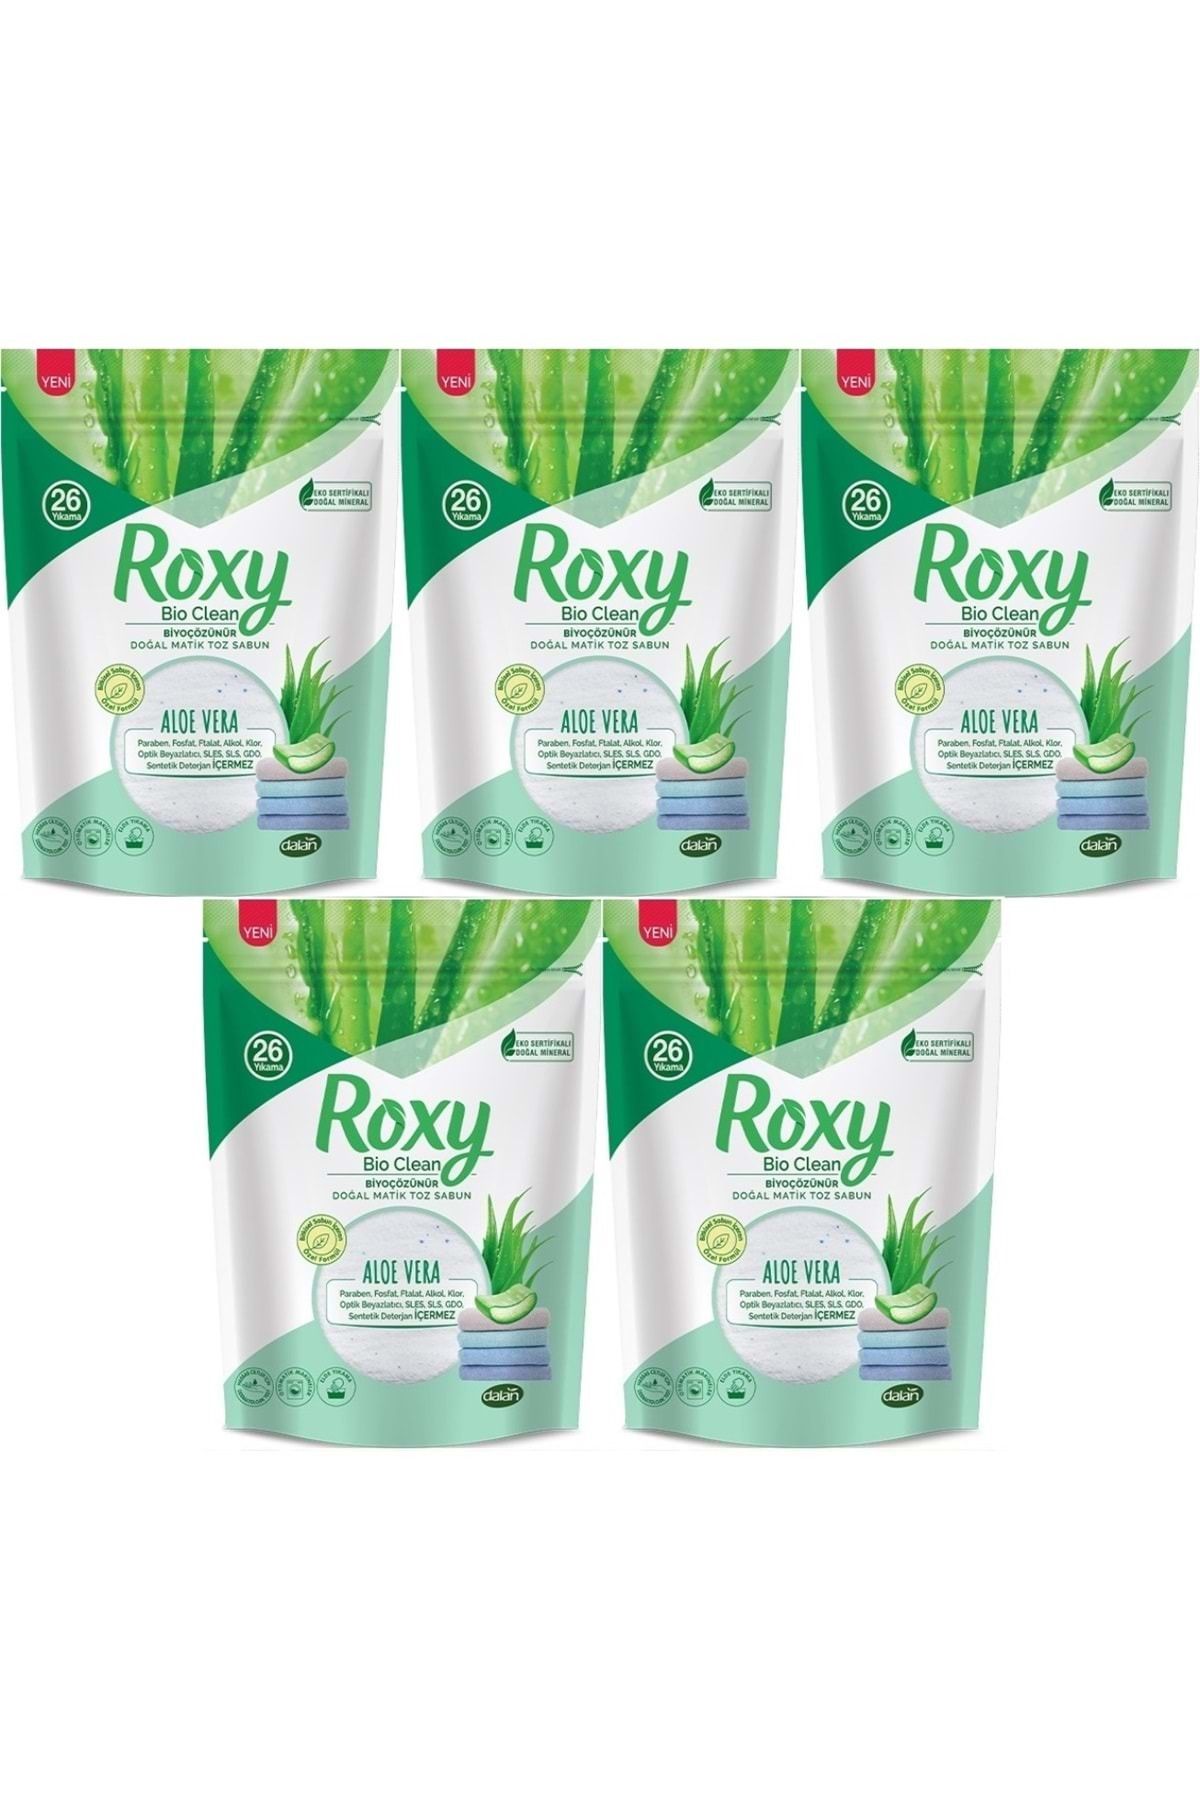 Dalan Roxy Bio Clean Matik Sabun Tozu 800gr Aloe Vera (5 Li Set) (130 Yıkama)